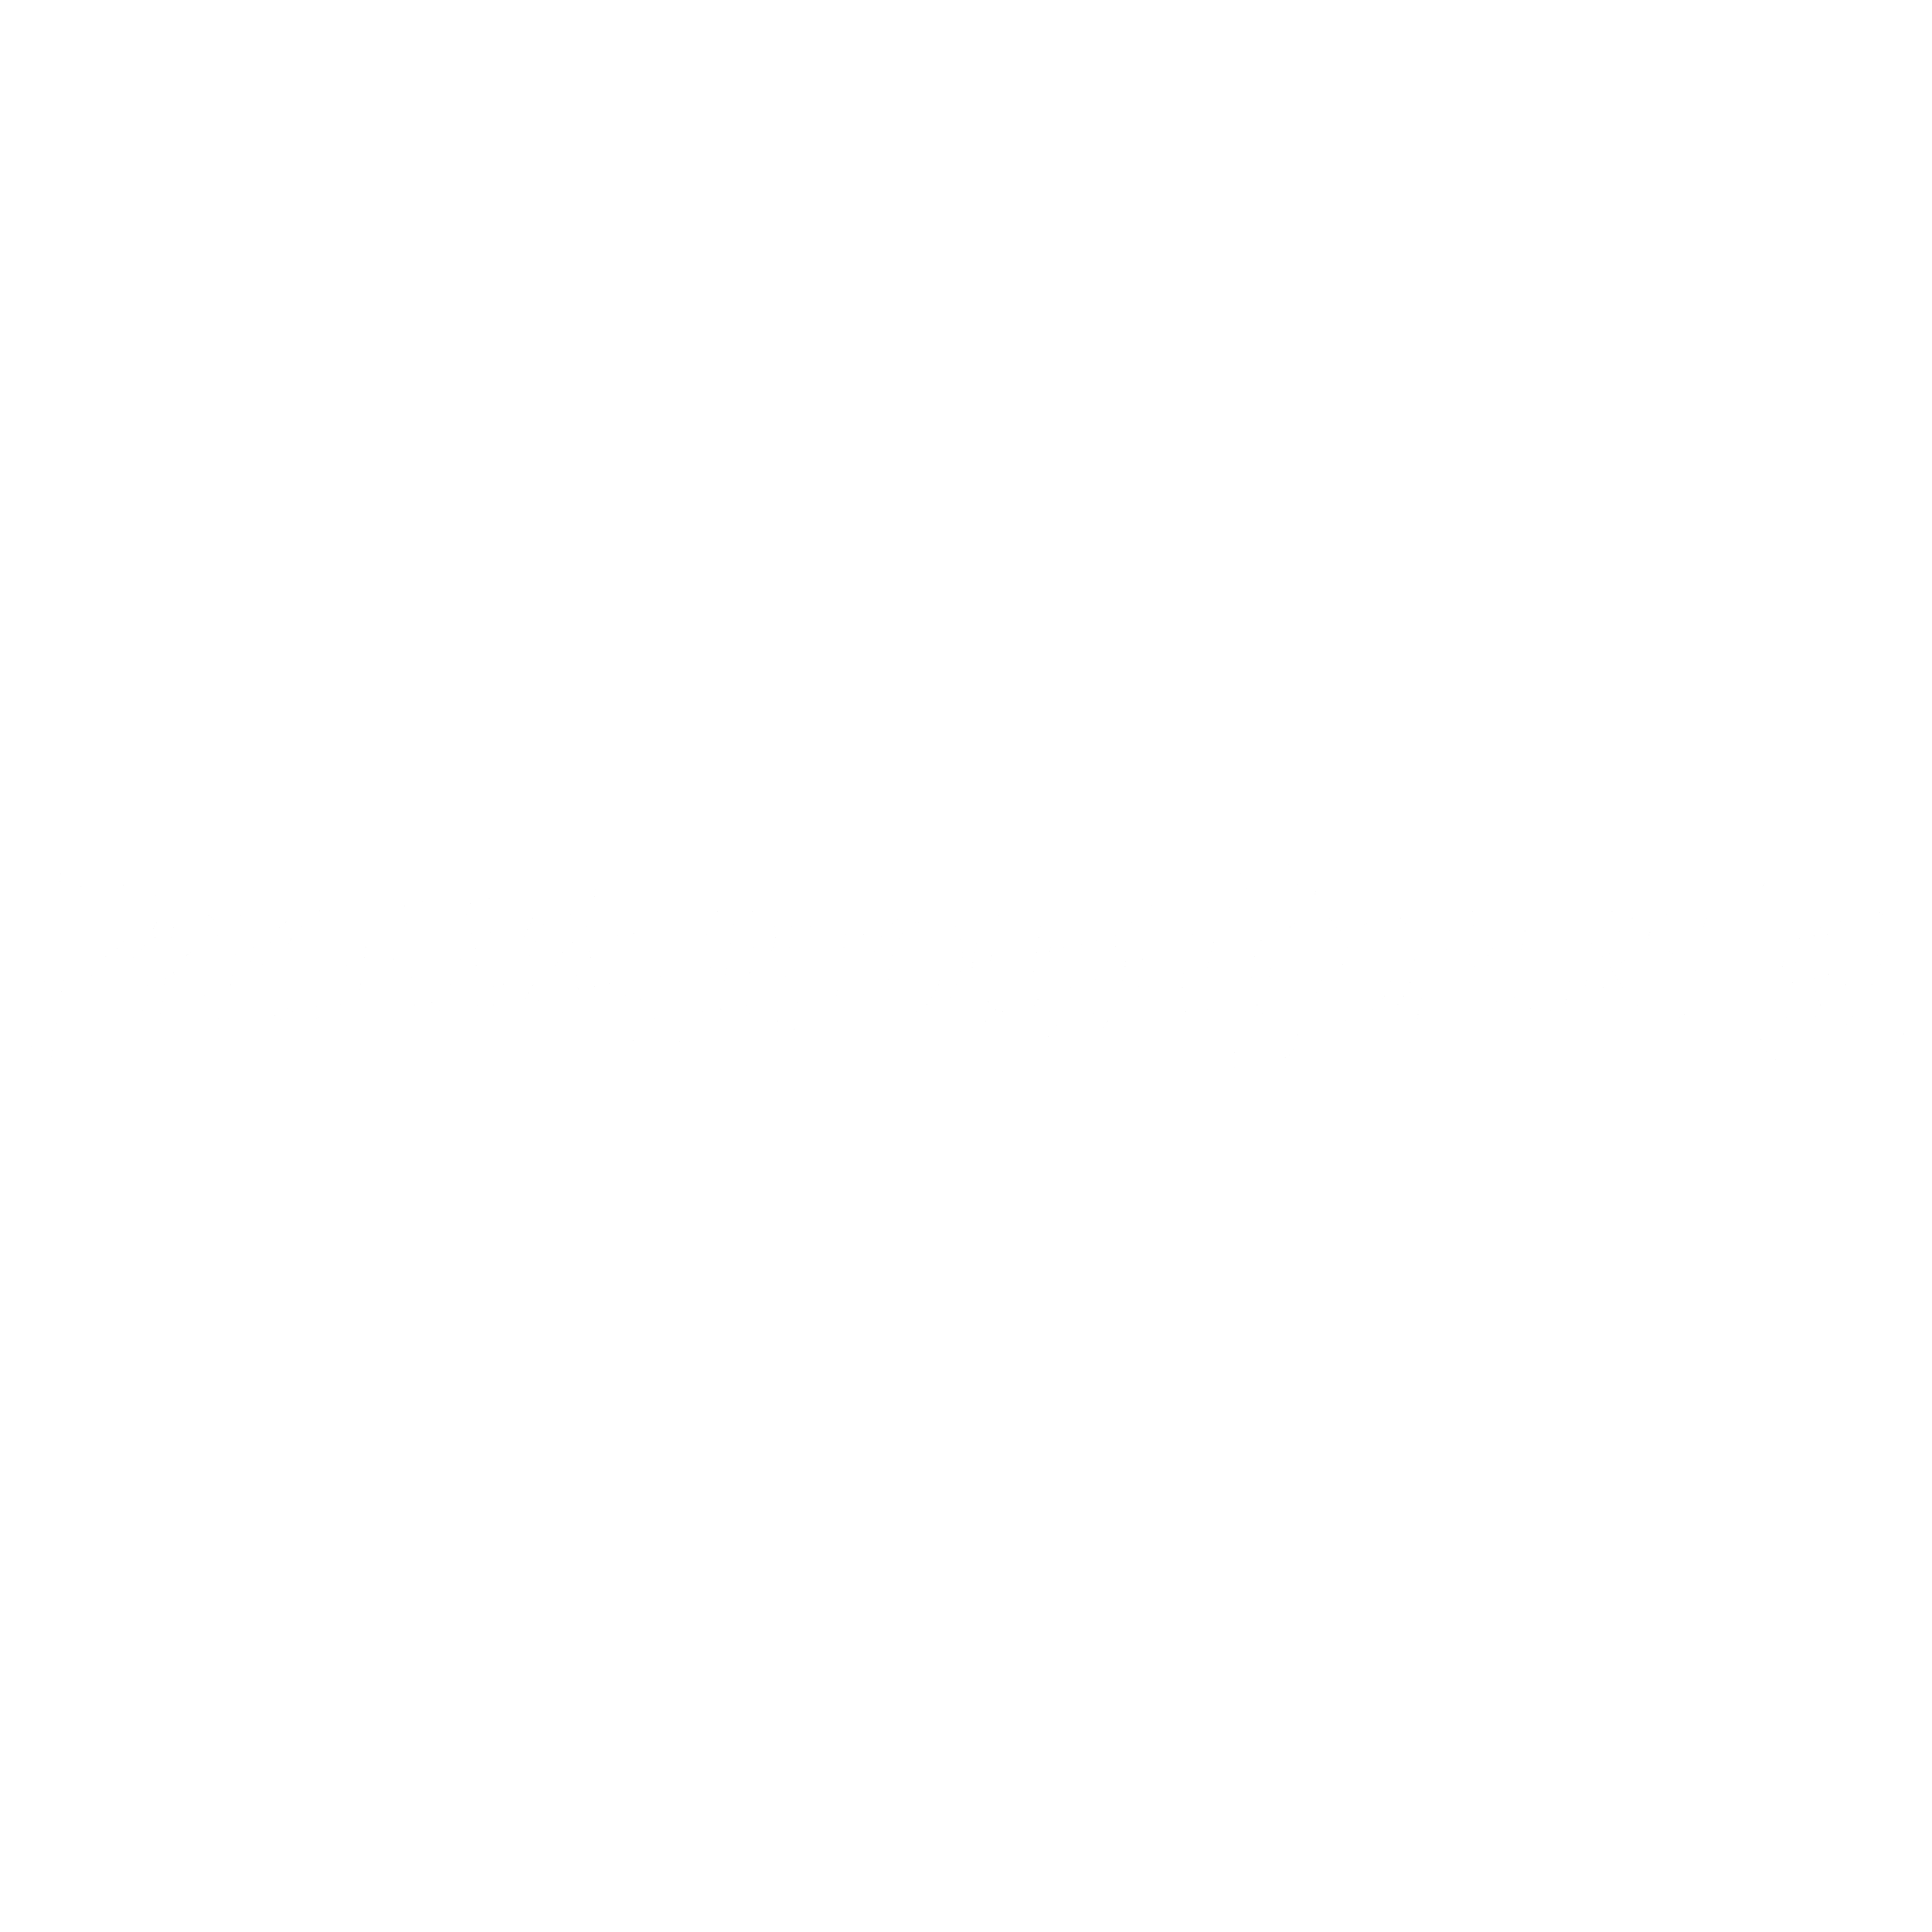 PricewaterhouseCoopers Logo - PricewaterhouseCoopers Logo PNG Transparent & SVG Vector - Freebie ...